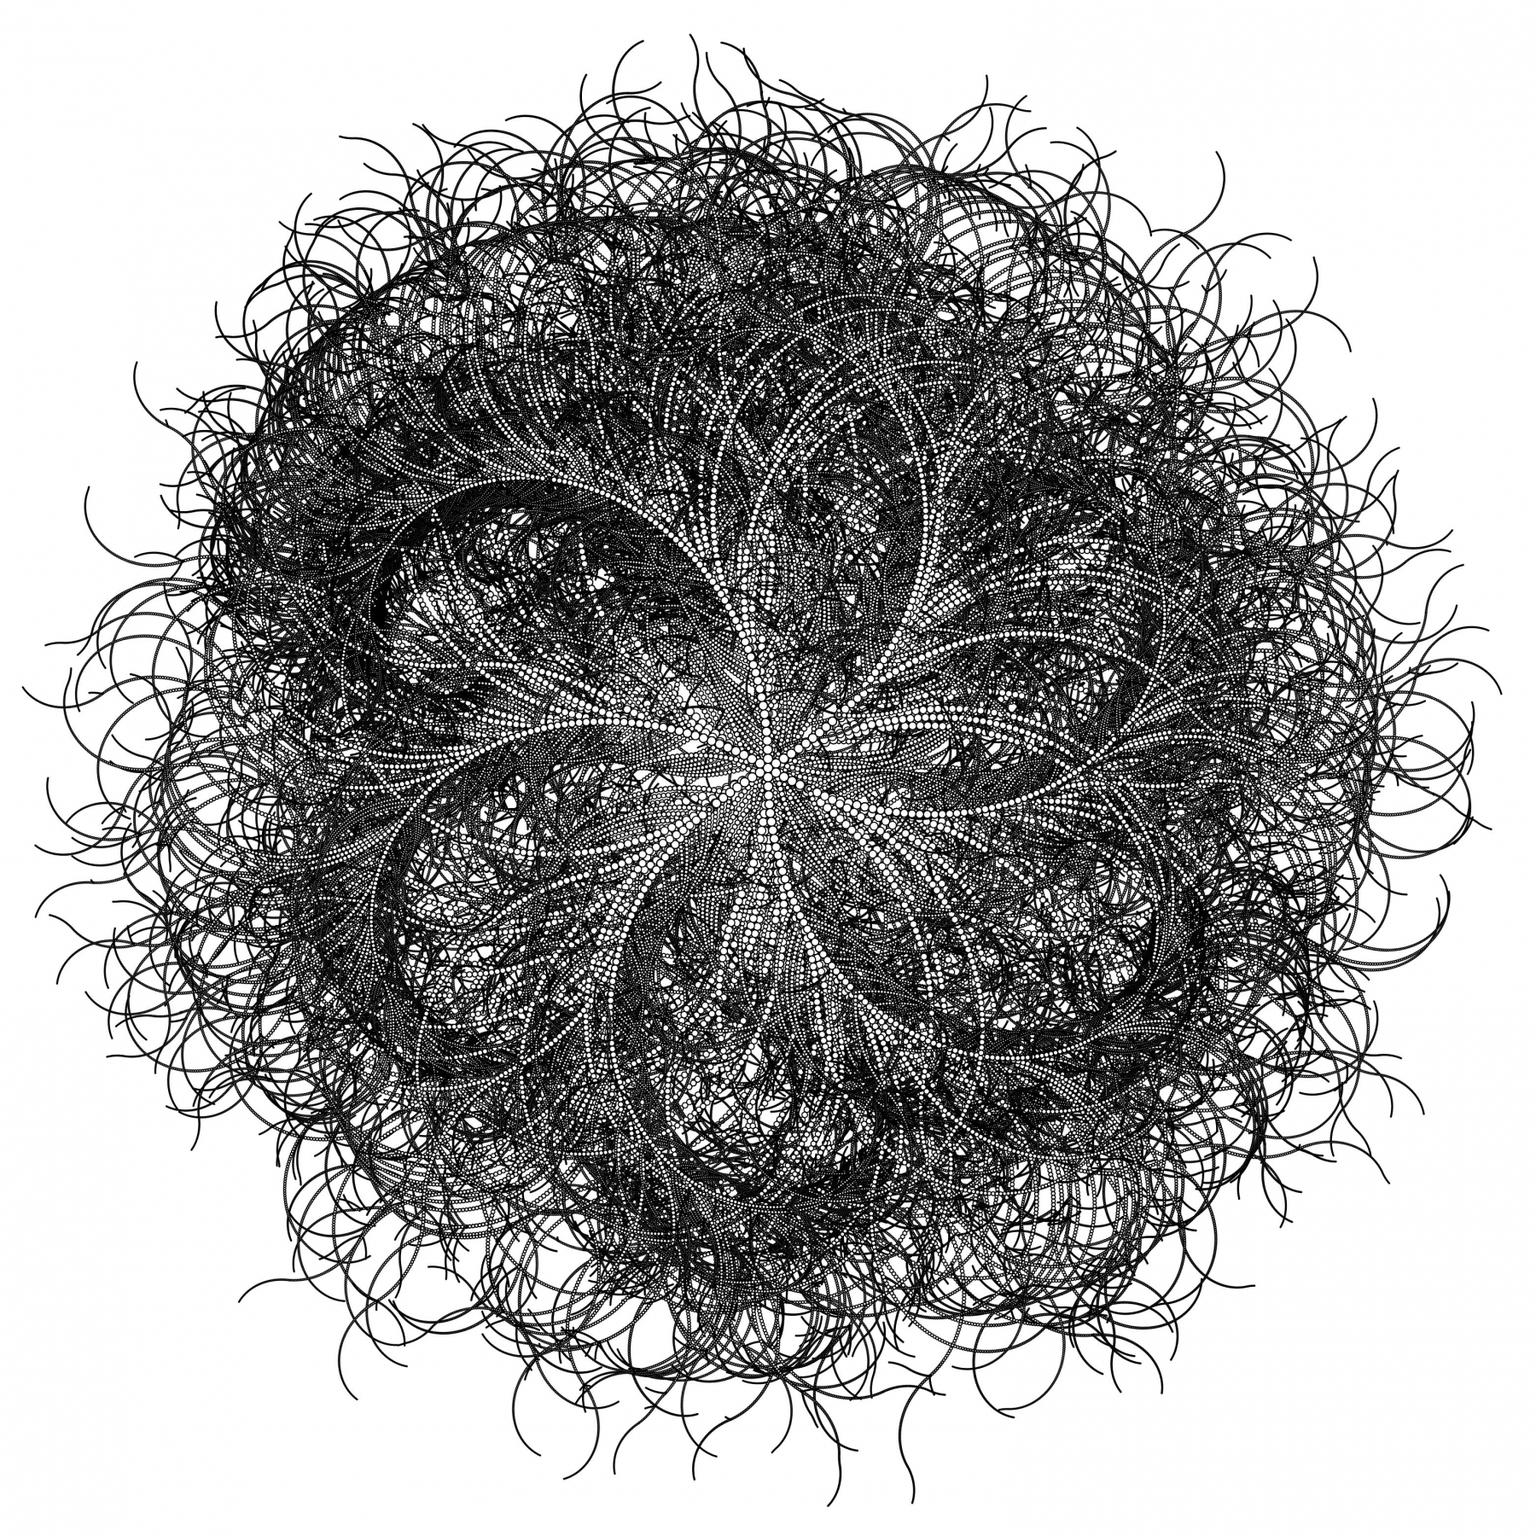 Image for entry 'Infinite Bloom, a Recursive Flower'